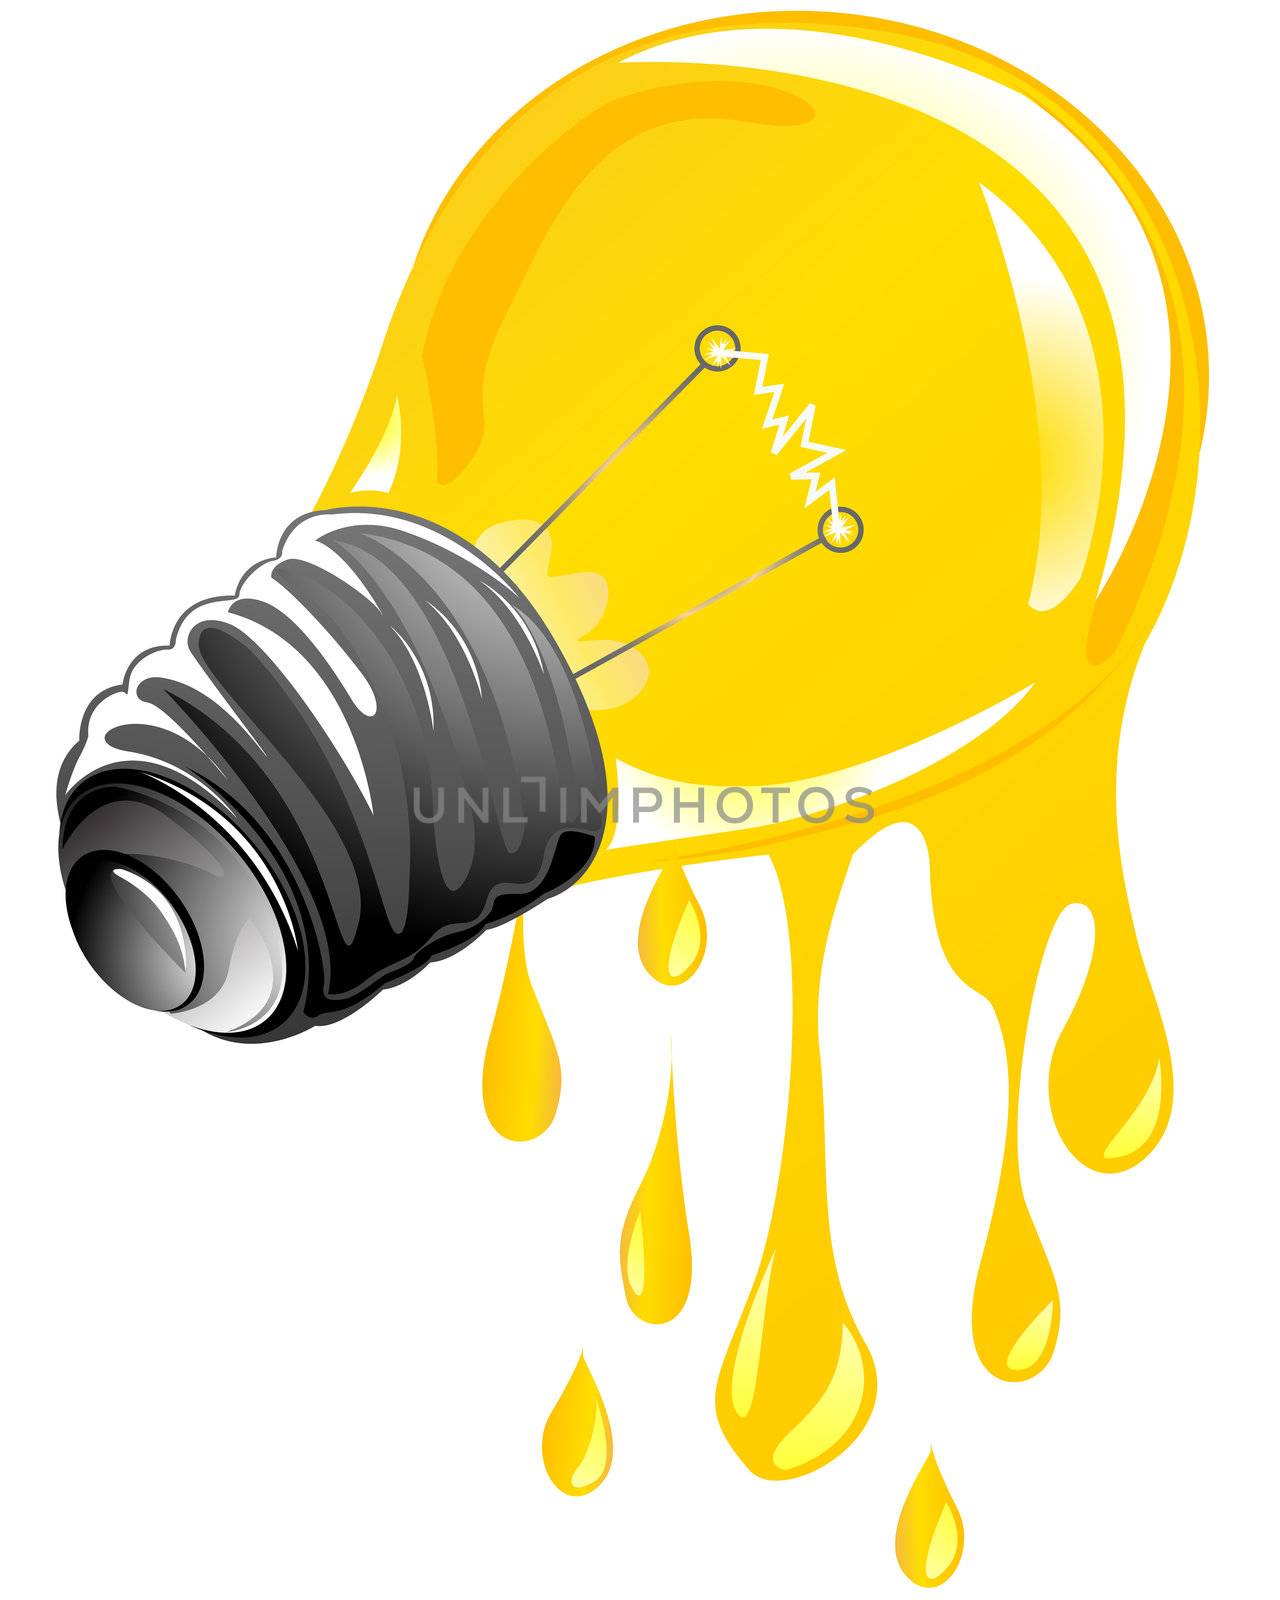 dripping energy light bulb by Lirch